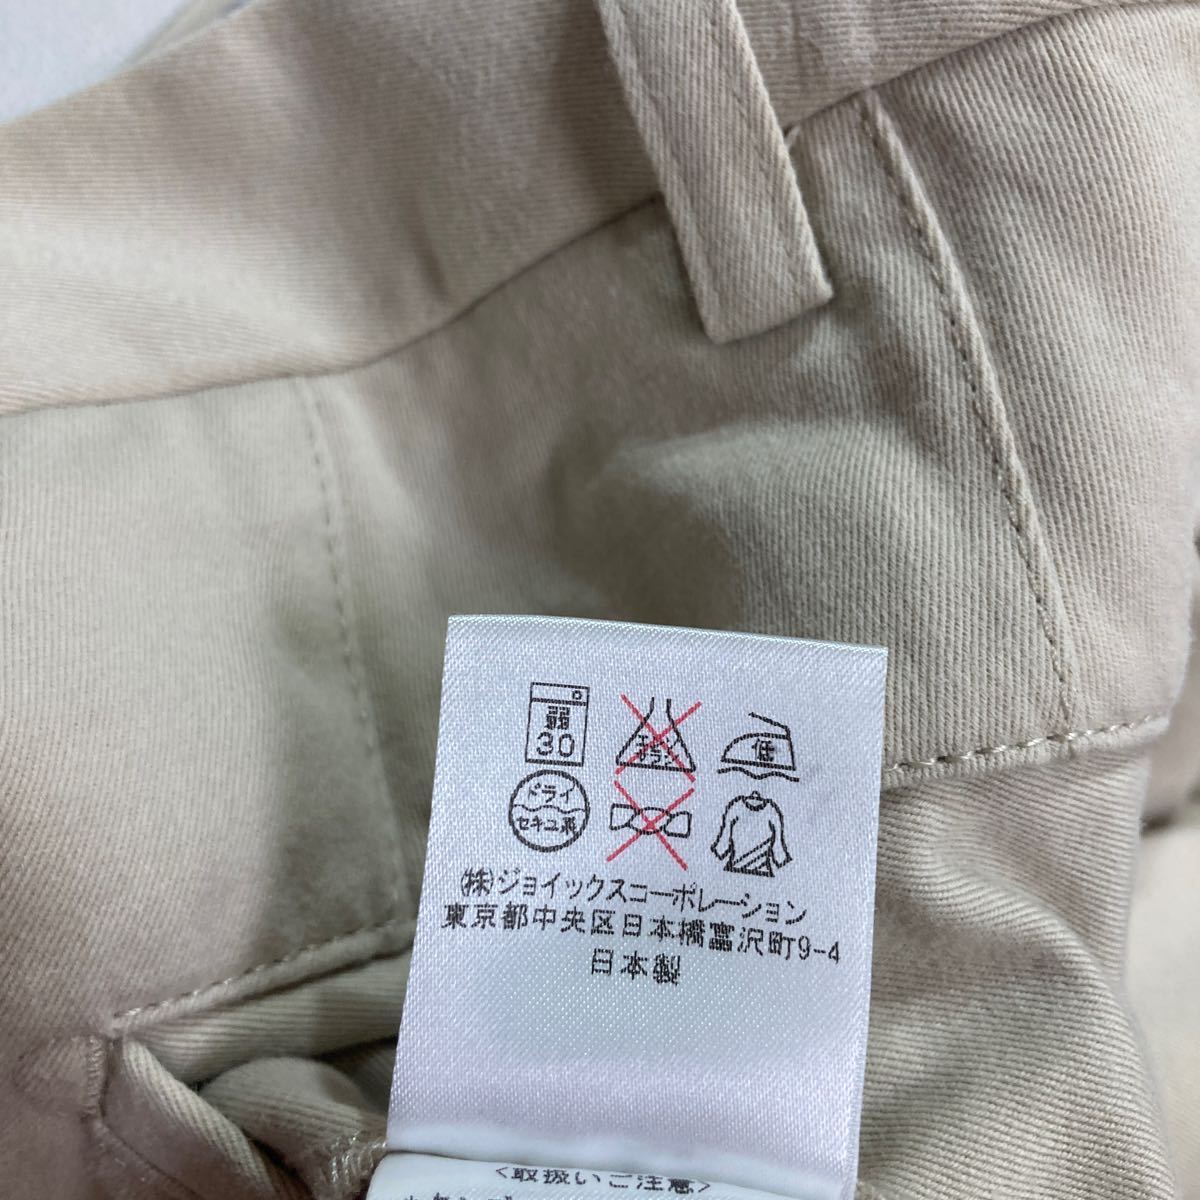 305 LANVIN COLLECTION Lanvin collection chinos slacks pants W94 men's casual beige 40301AO